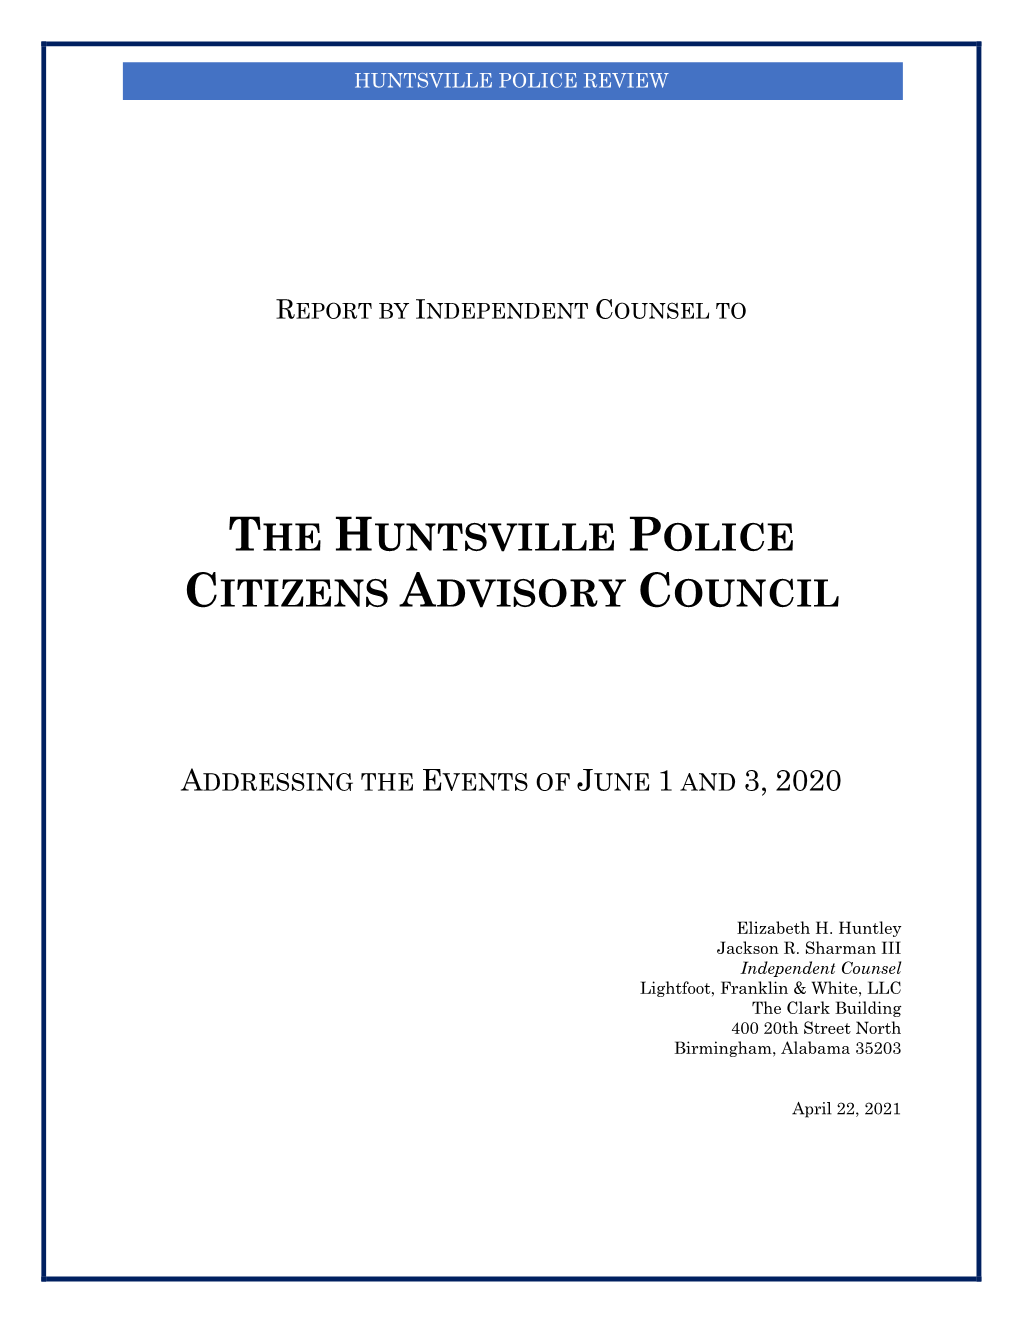 The Huntsville Police Citizens Advisory Council